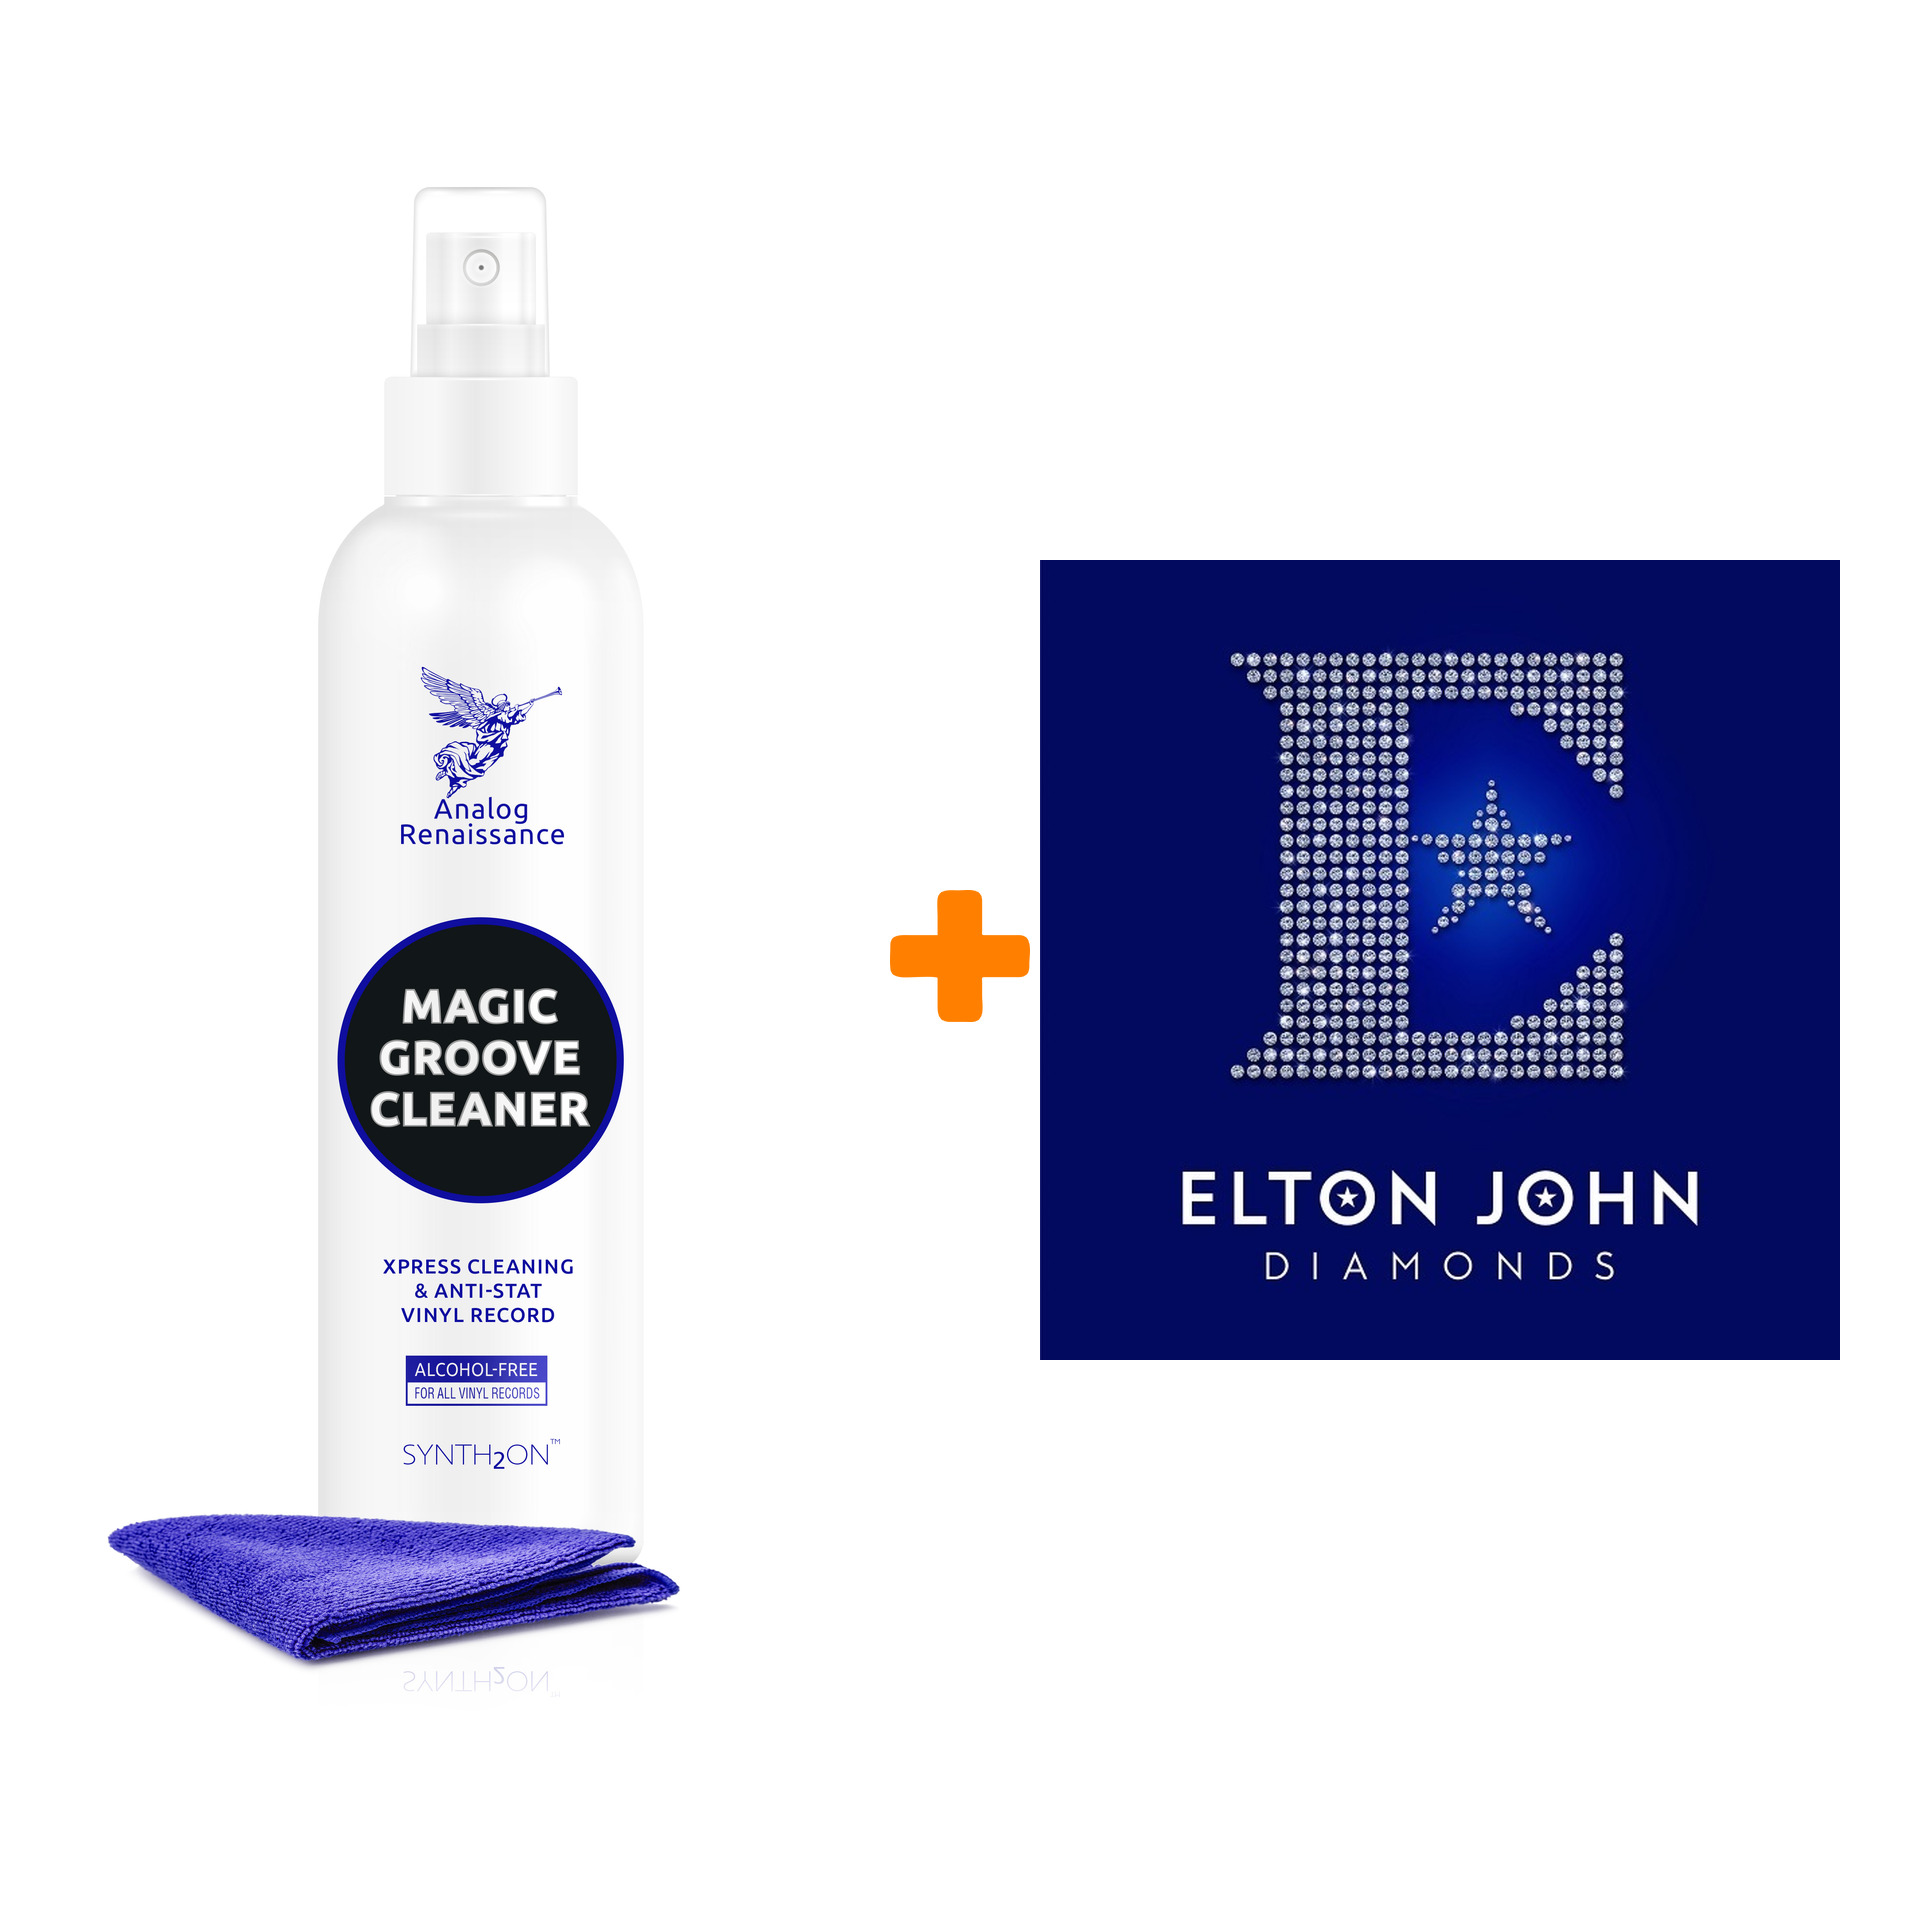 JOHN ELTON Diamonds 2LP + Спрей для очистки LP с микрофиброй 250мл Набор